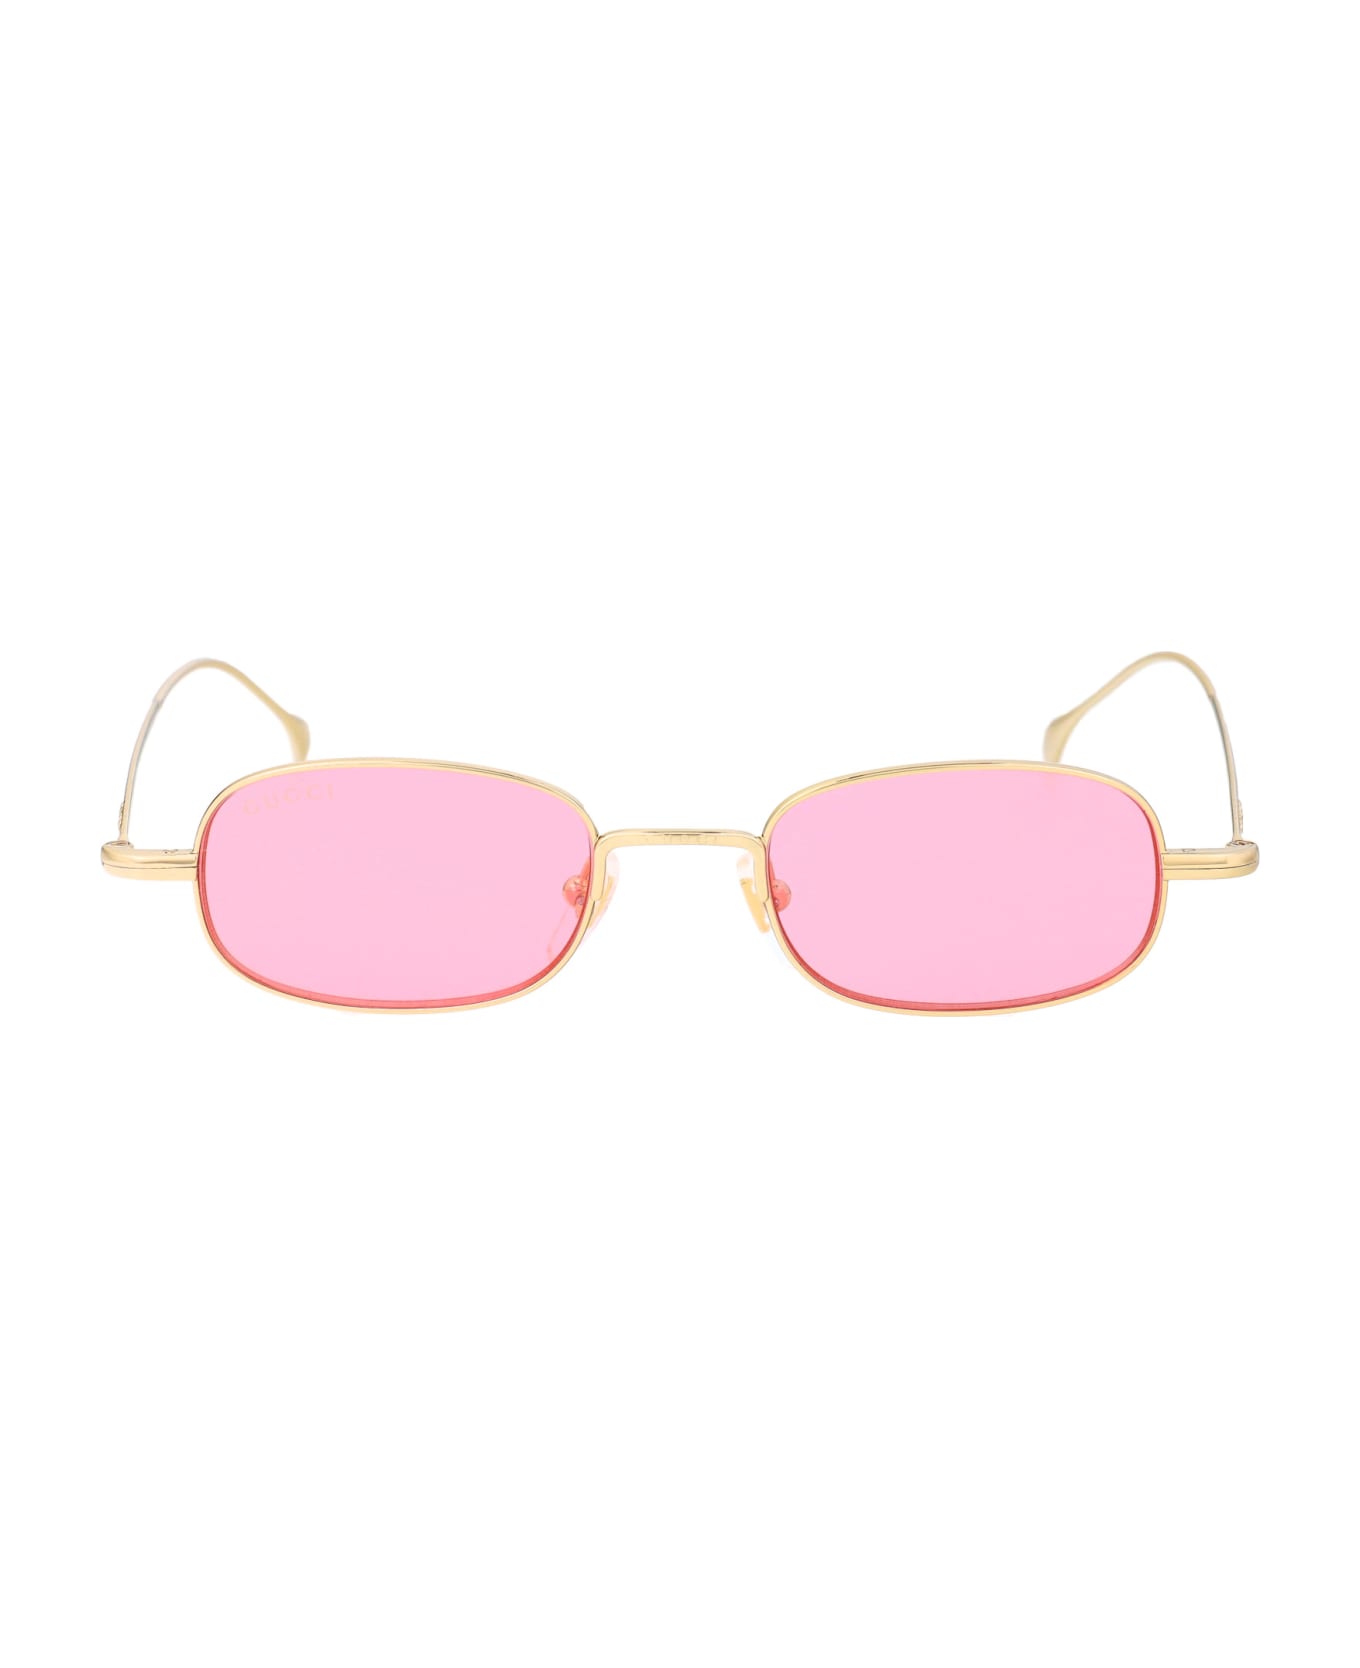 Gucci Eyewear Gg1648s Sunglasses - 005 GOLD GOLD PINK